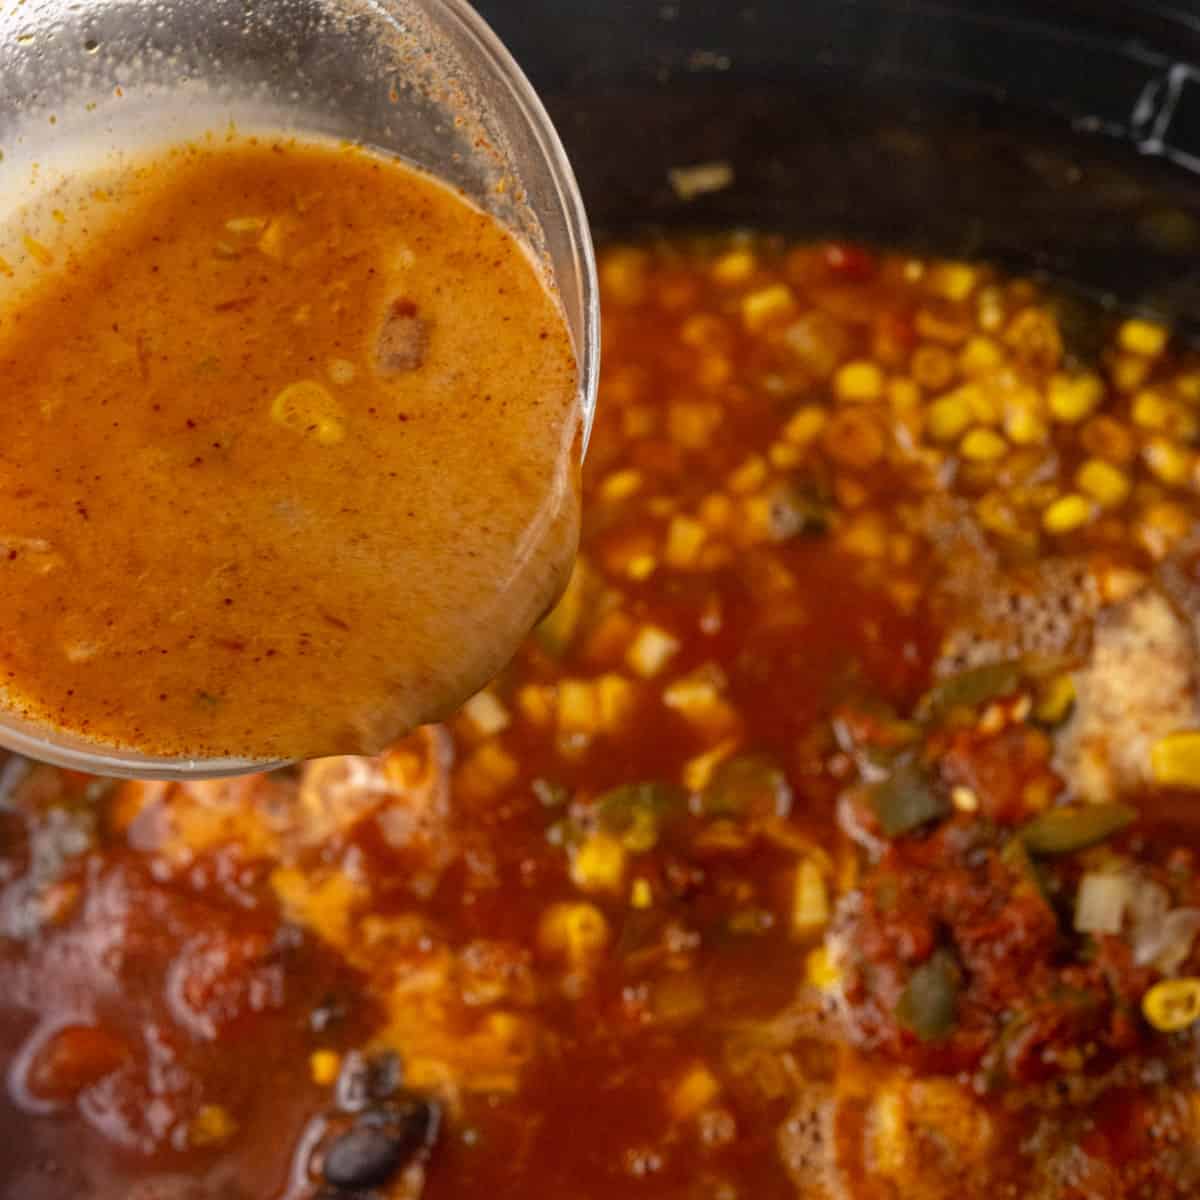 Adding Corn Starch into soup